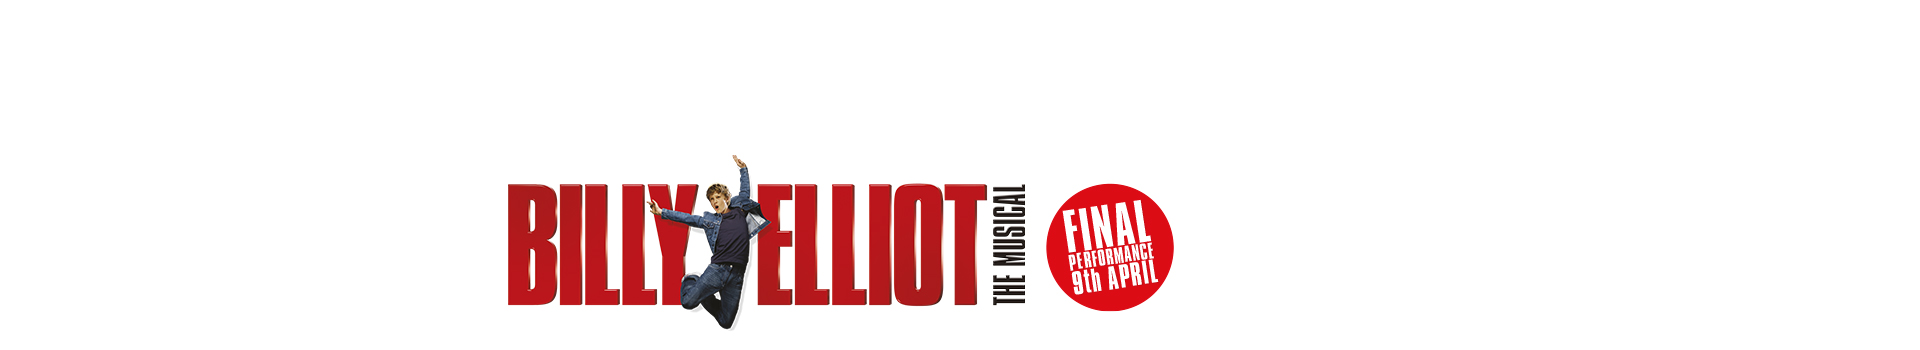 Billy Elliot tickets London book Billy Elliot tickets now! Final performances